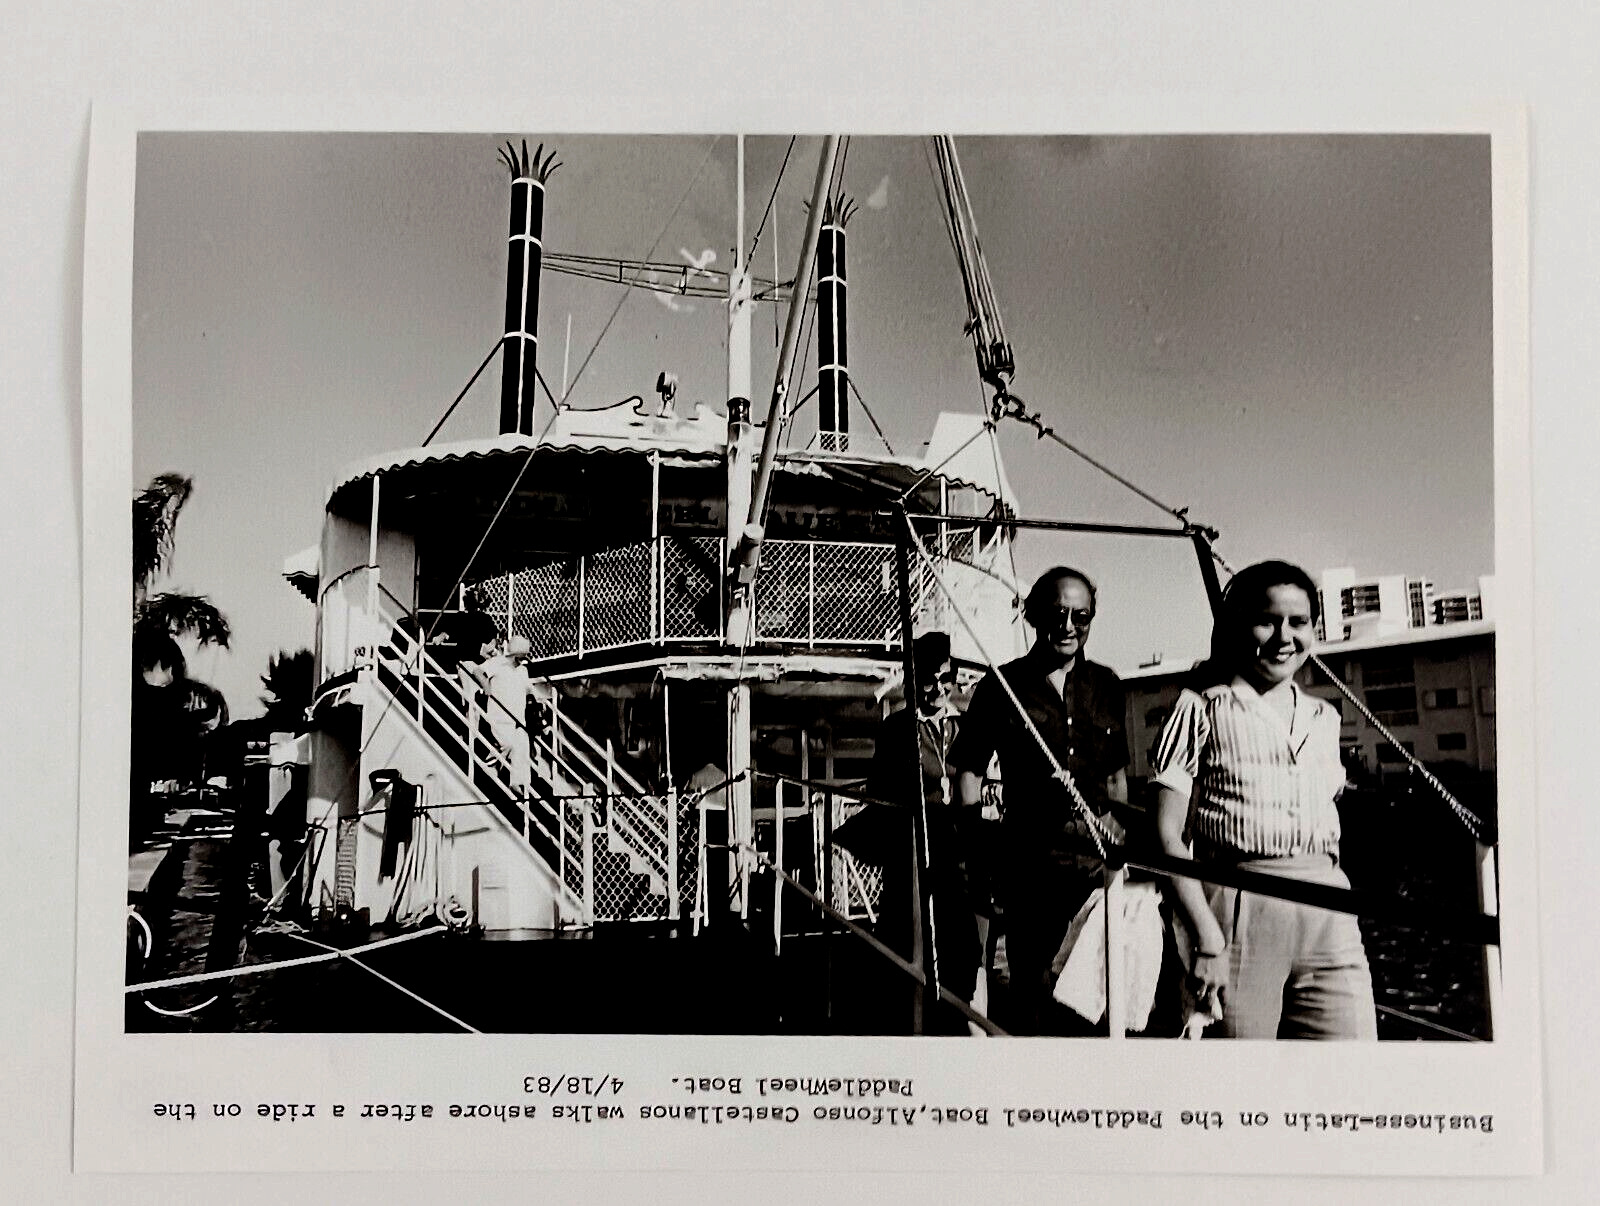 1983 Paddlewheel Queen Customers Tourist Arriving Tour Boat Vintage Press Photo